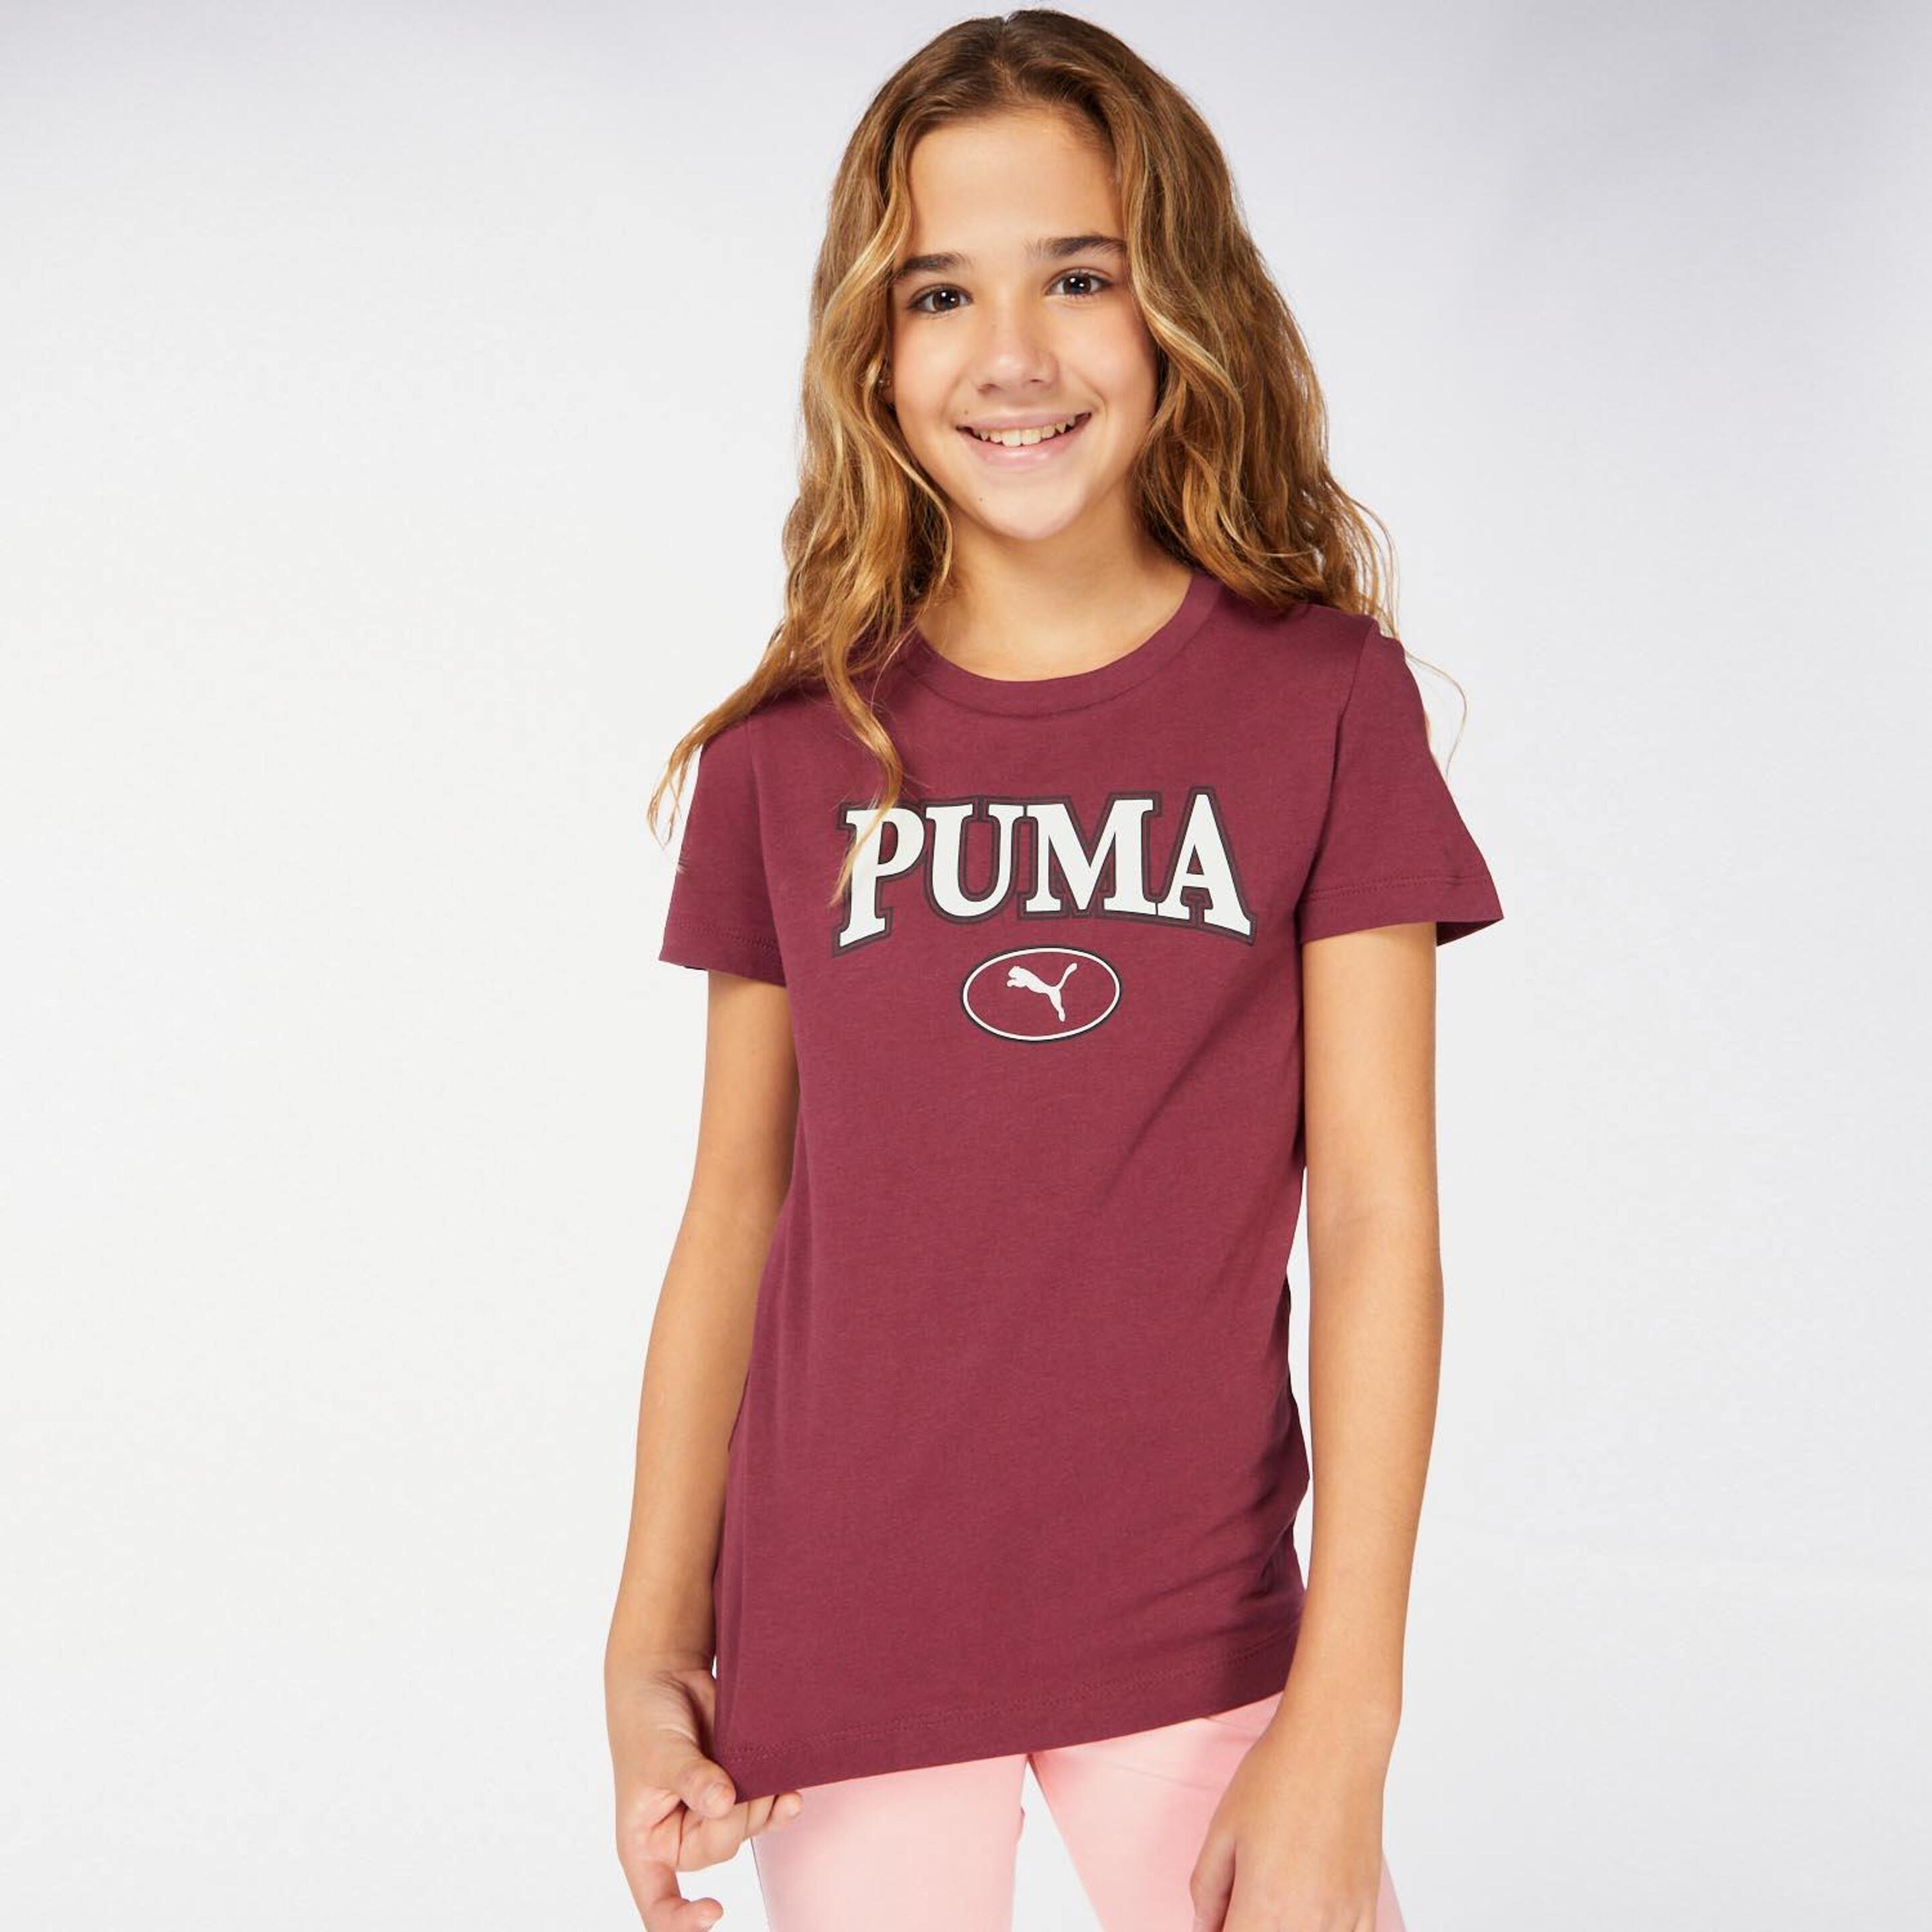 Camiseta Puma - rojo - Camiseta Niña